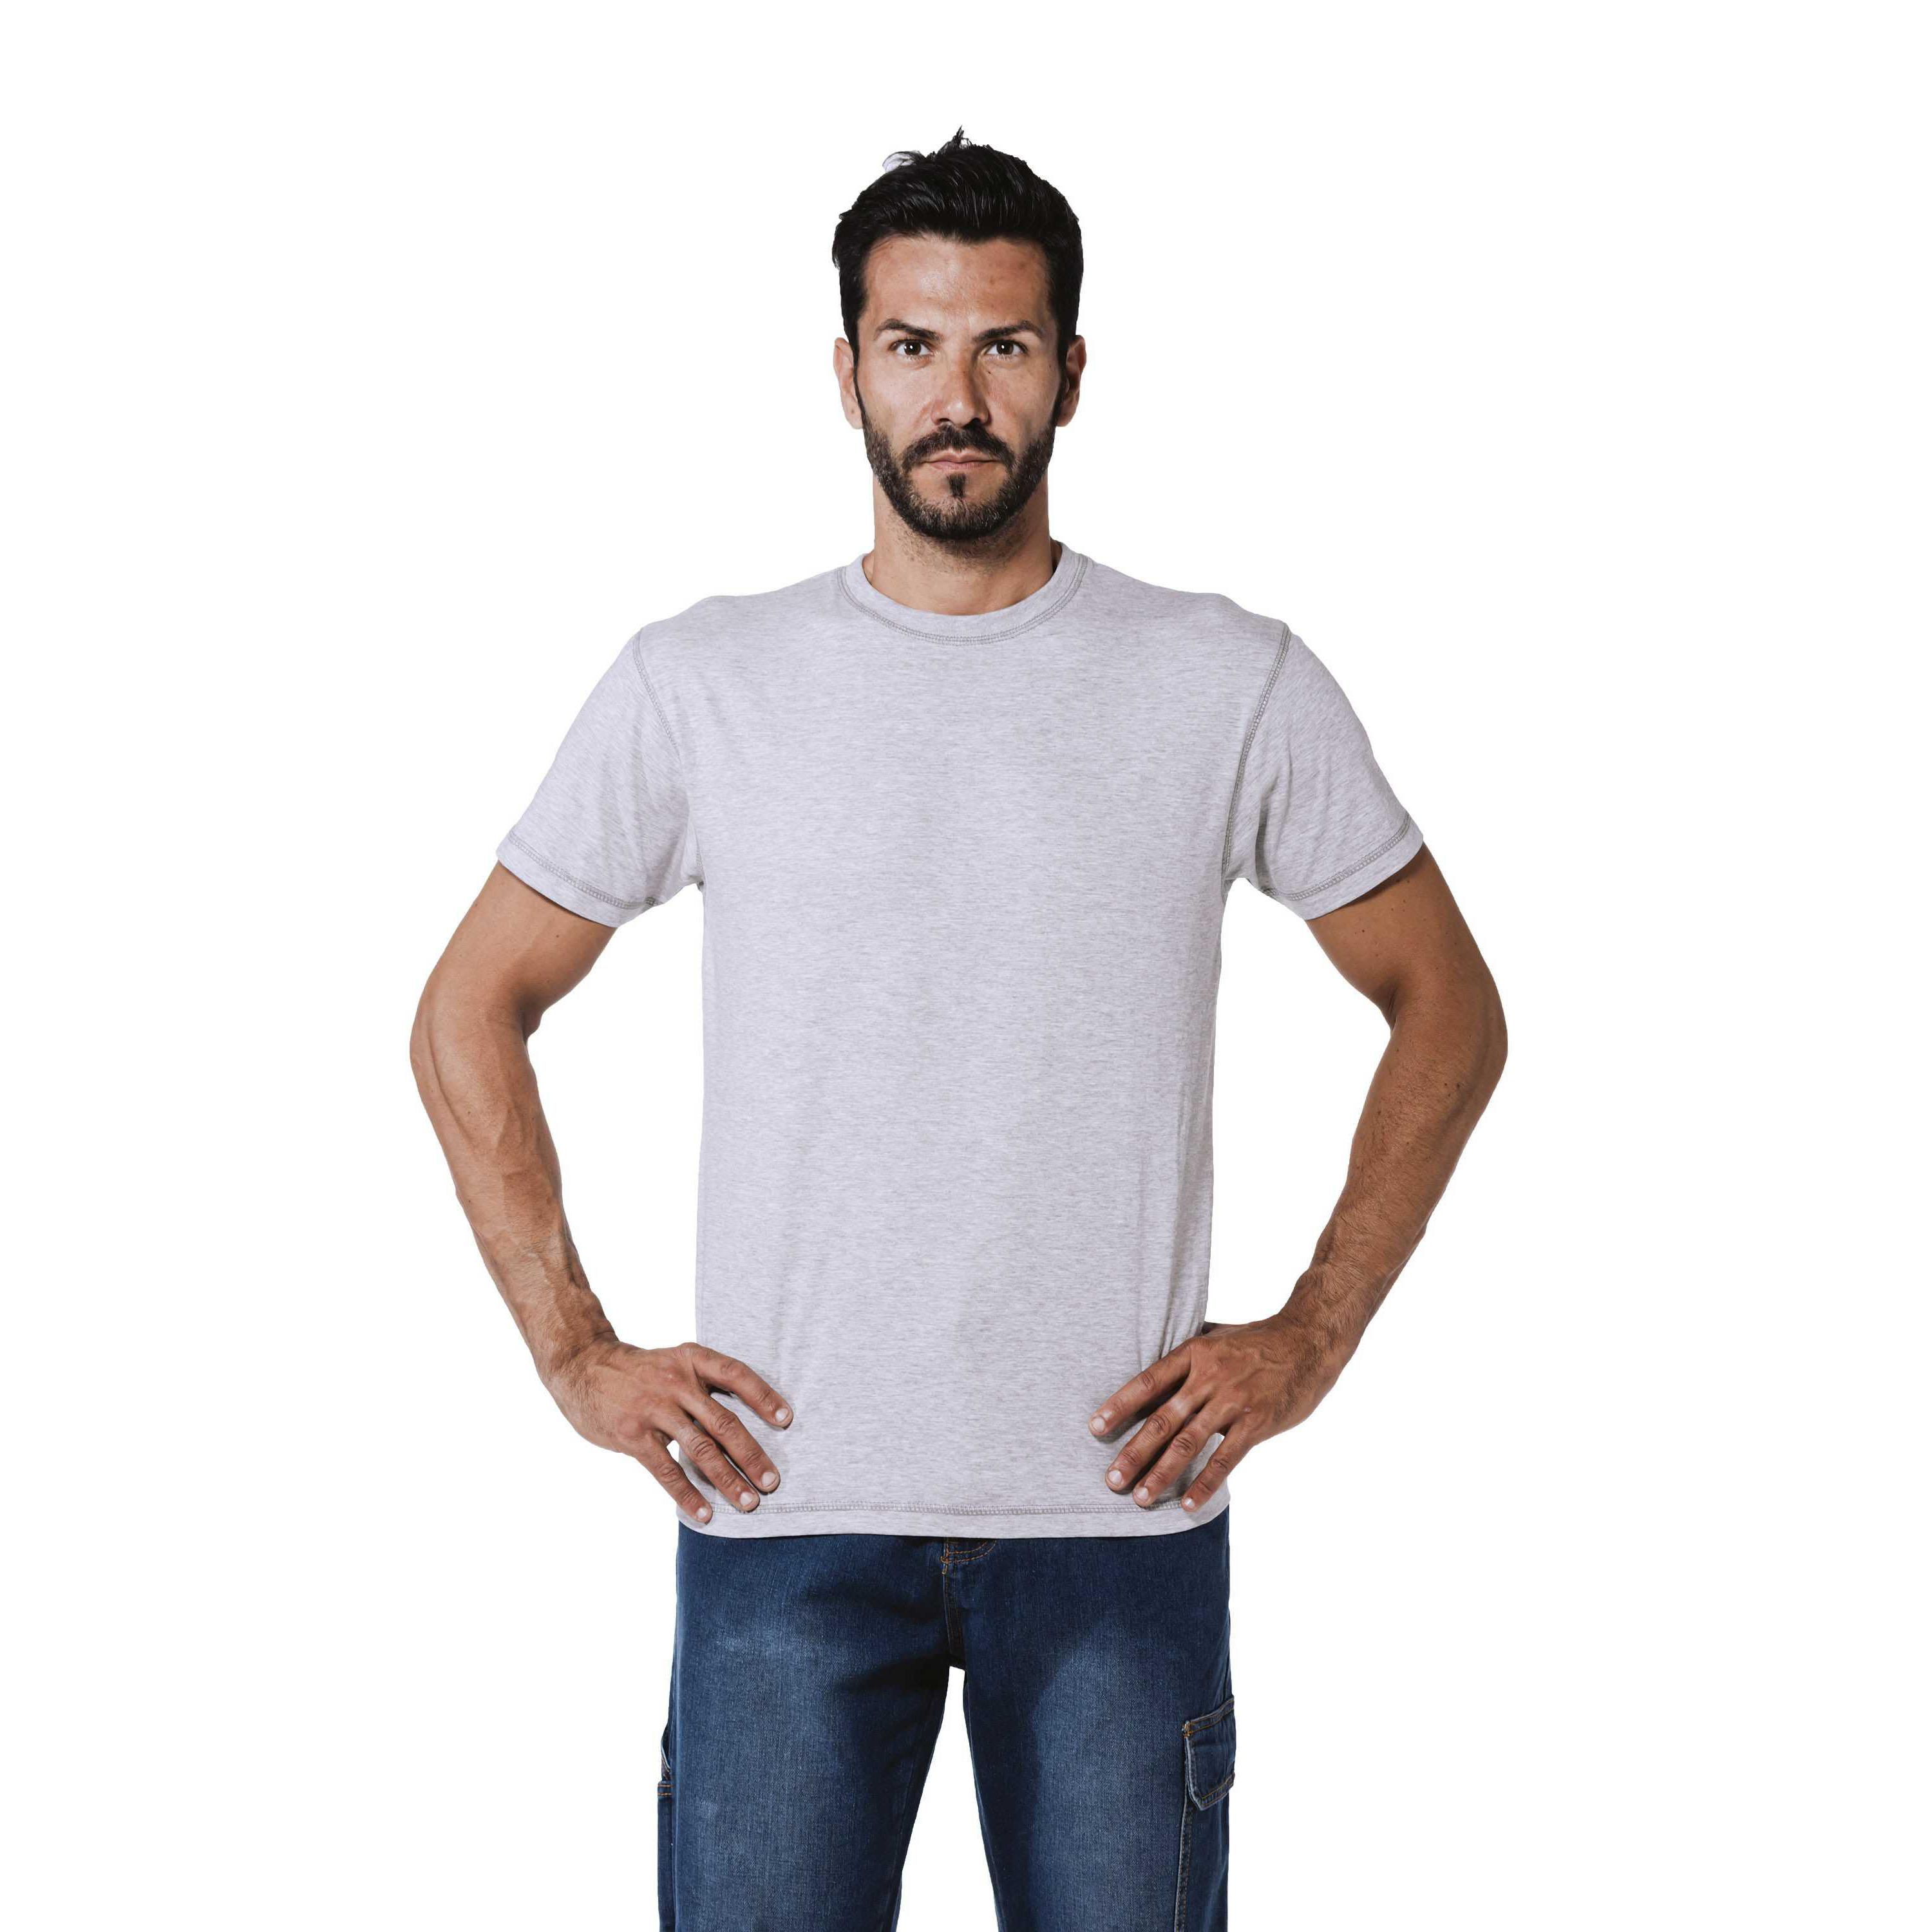 T-Shirt SPINNING6 Logica, la qualit della praticit